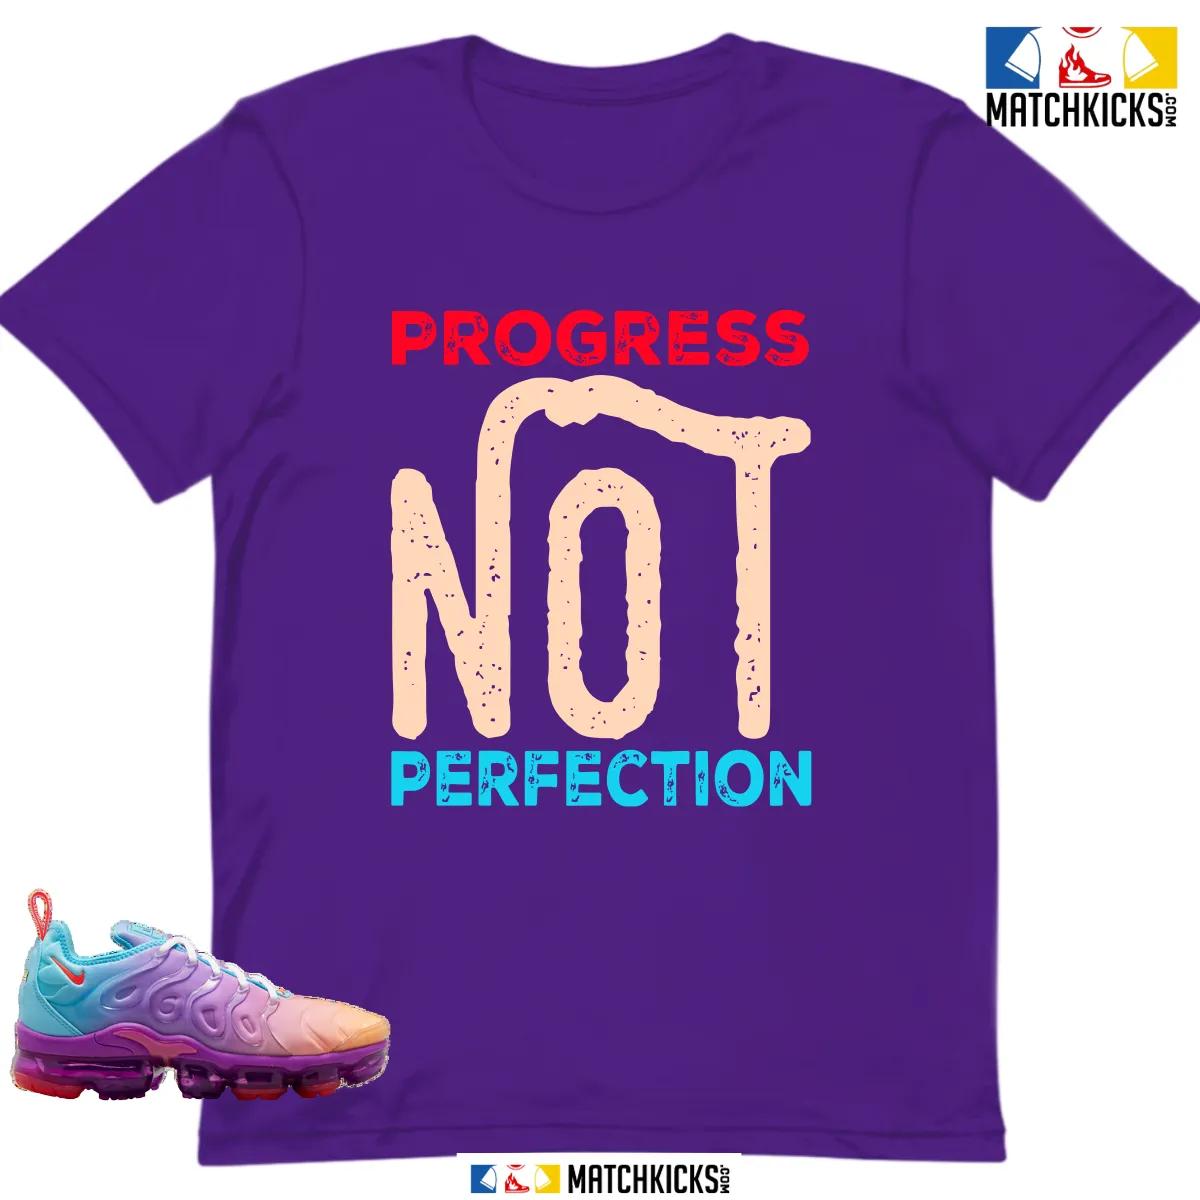 Custom Match - Purple T-Shirt - Nike Air VaporMax Plus Fuchsia Dream - Progress NOT Perfection